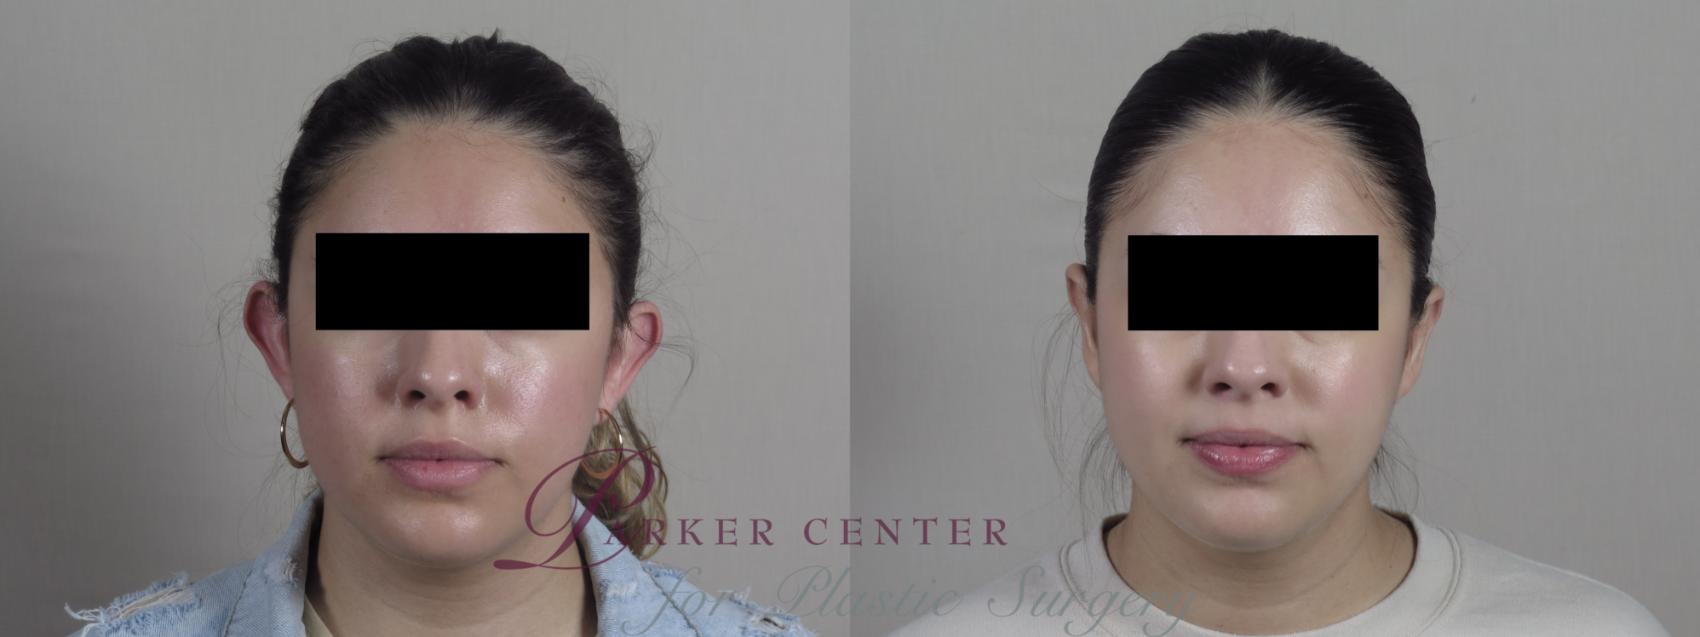 Otoplasty Case 1269 Before & After Front | Paramus, NJ | Parker Center for Plastic Surgery